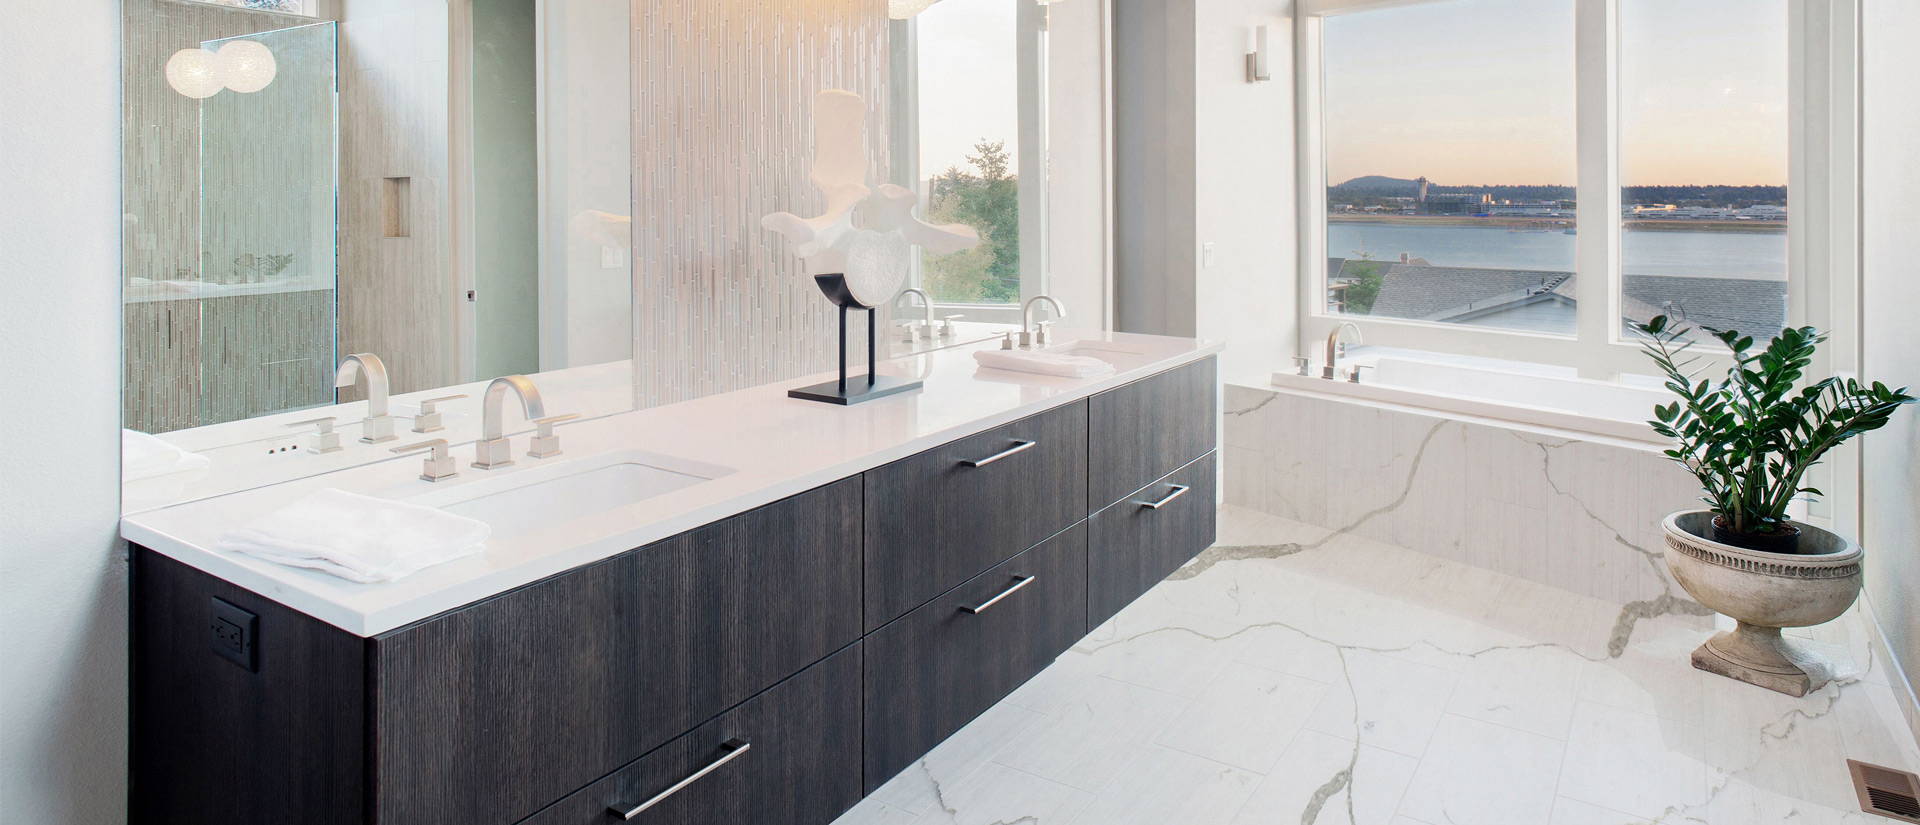 calacatta-classique-quartz-bathroom-vanity-countertops-tampa-fl (1).jpg